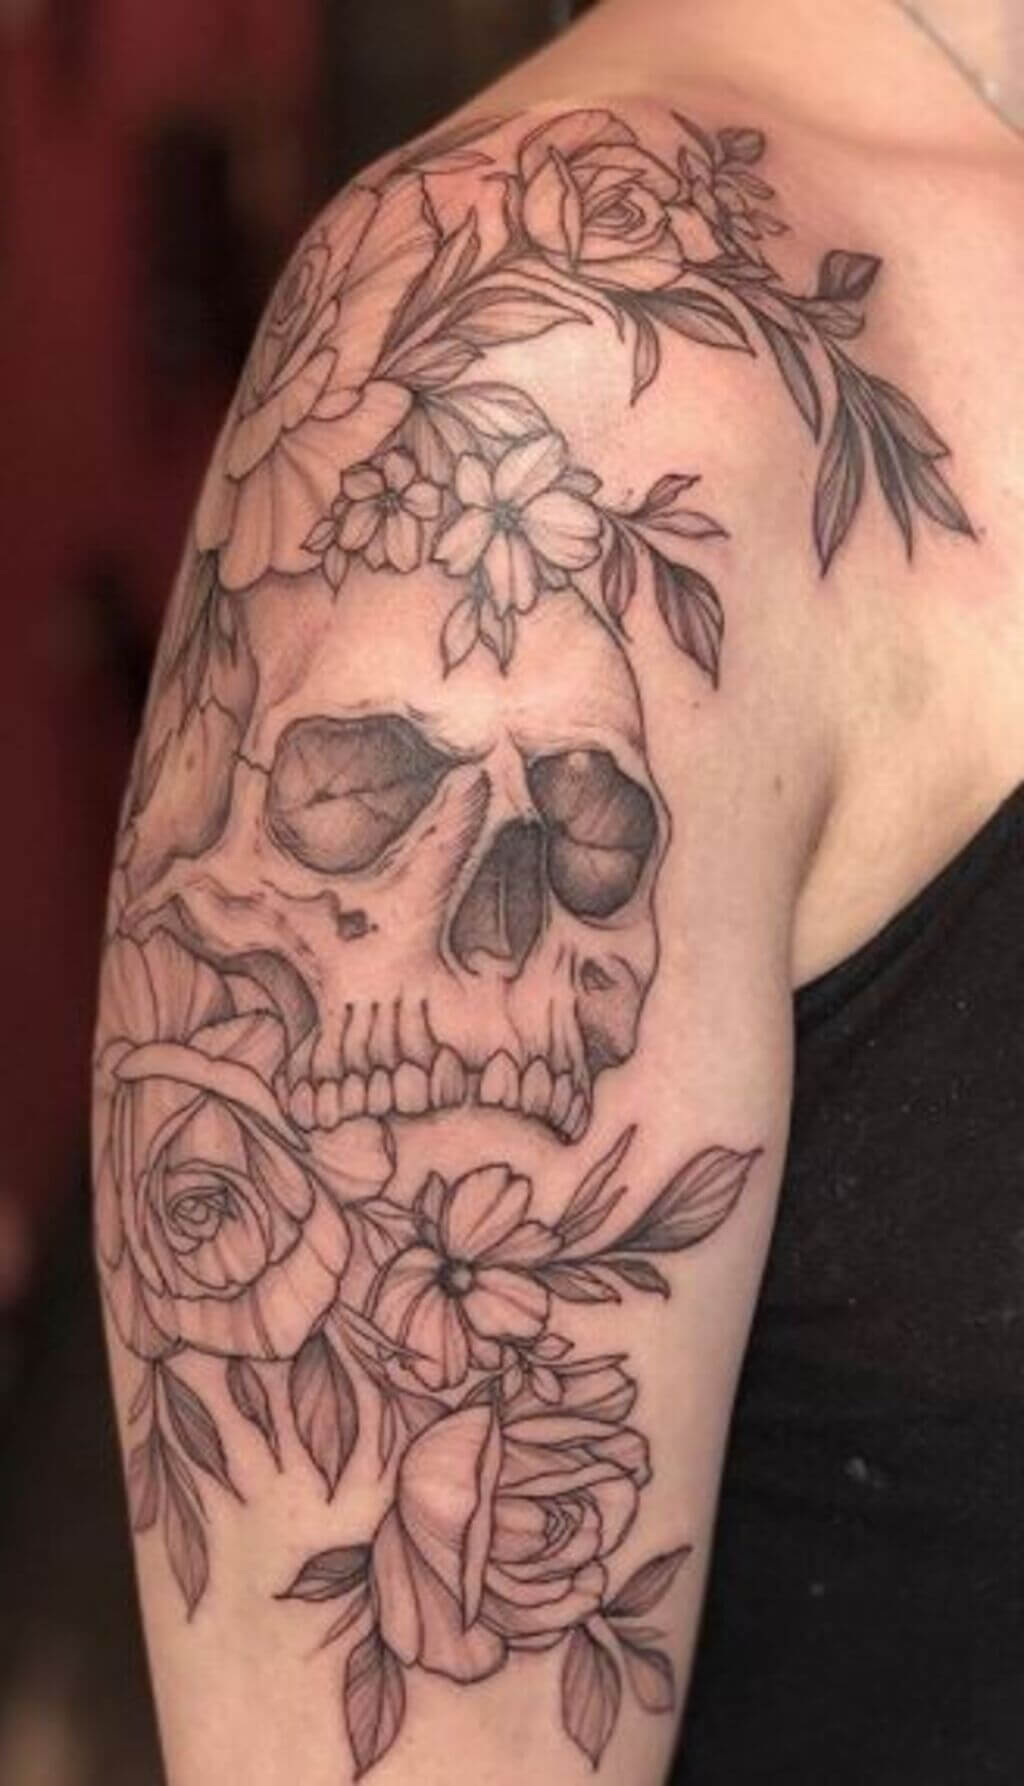 Half Sleeve Tattoo Women of a Skull